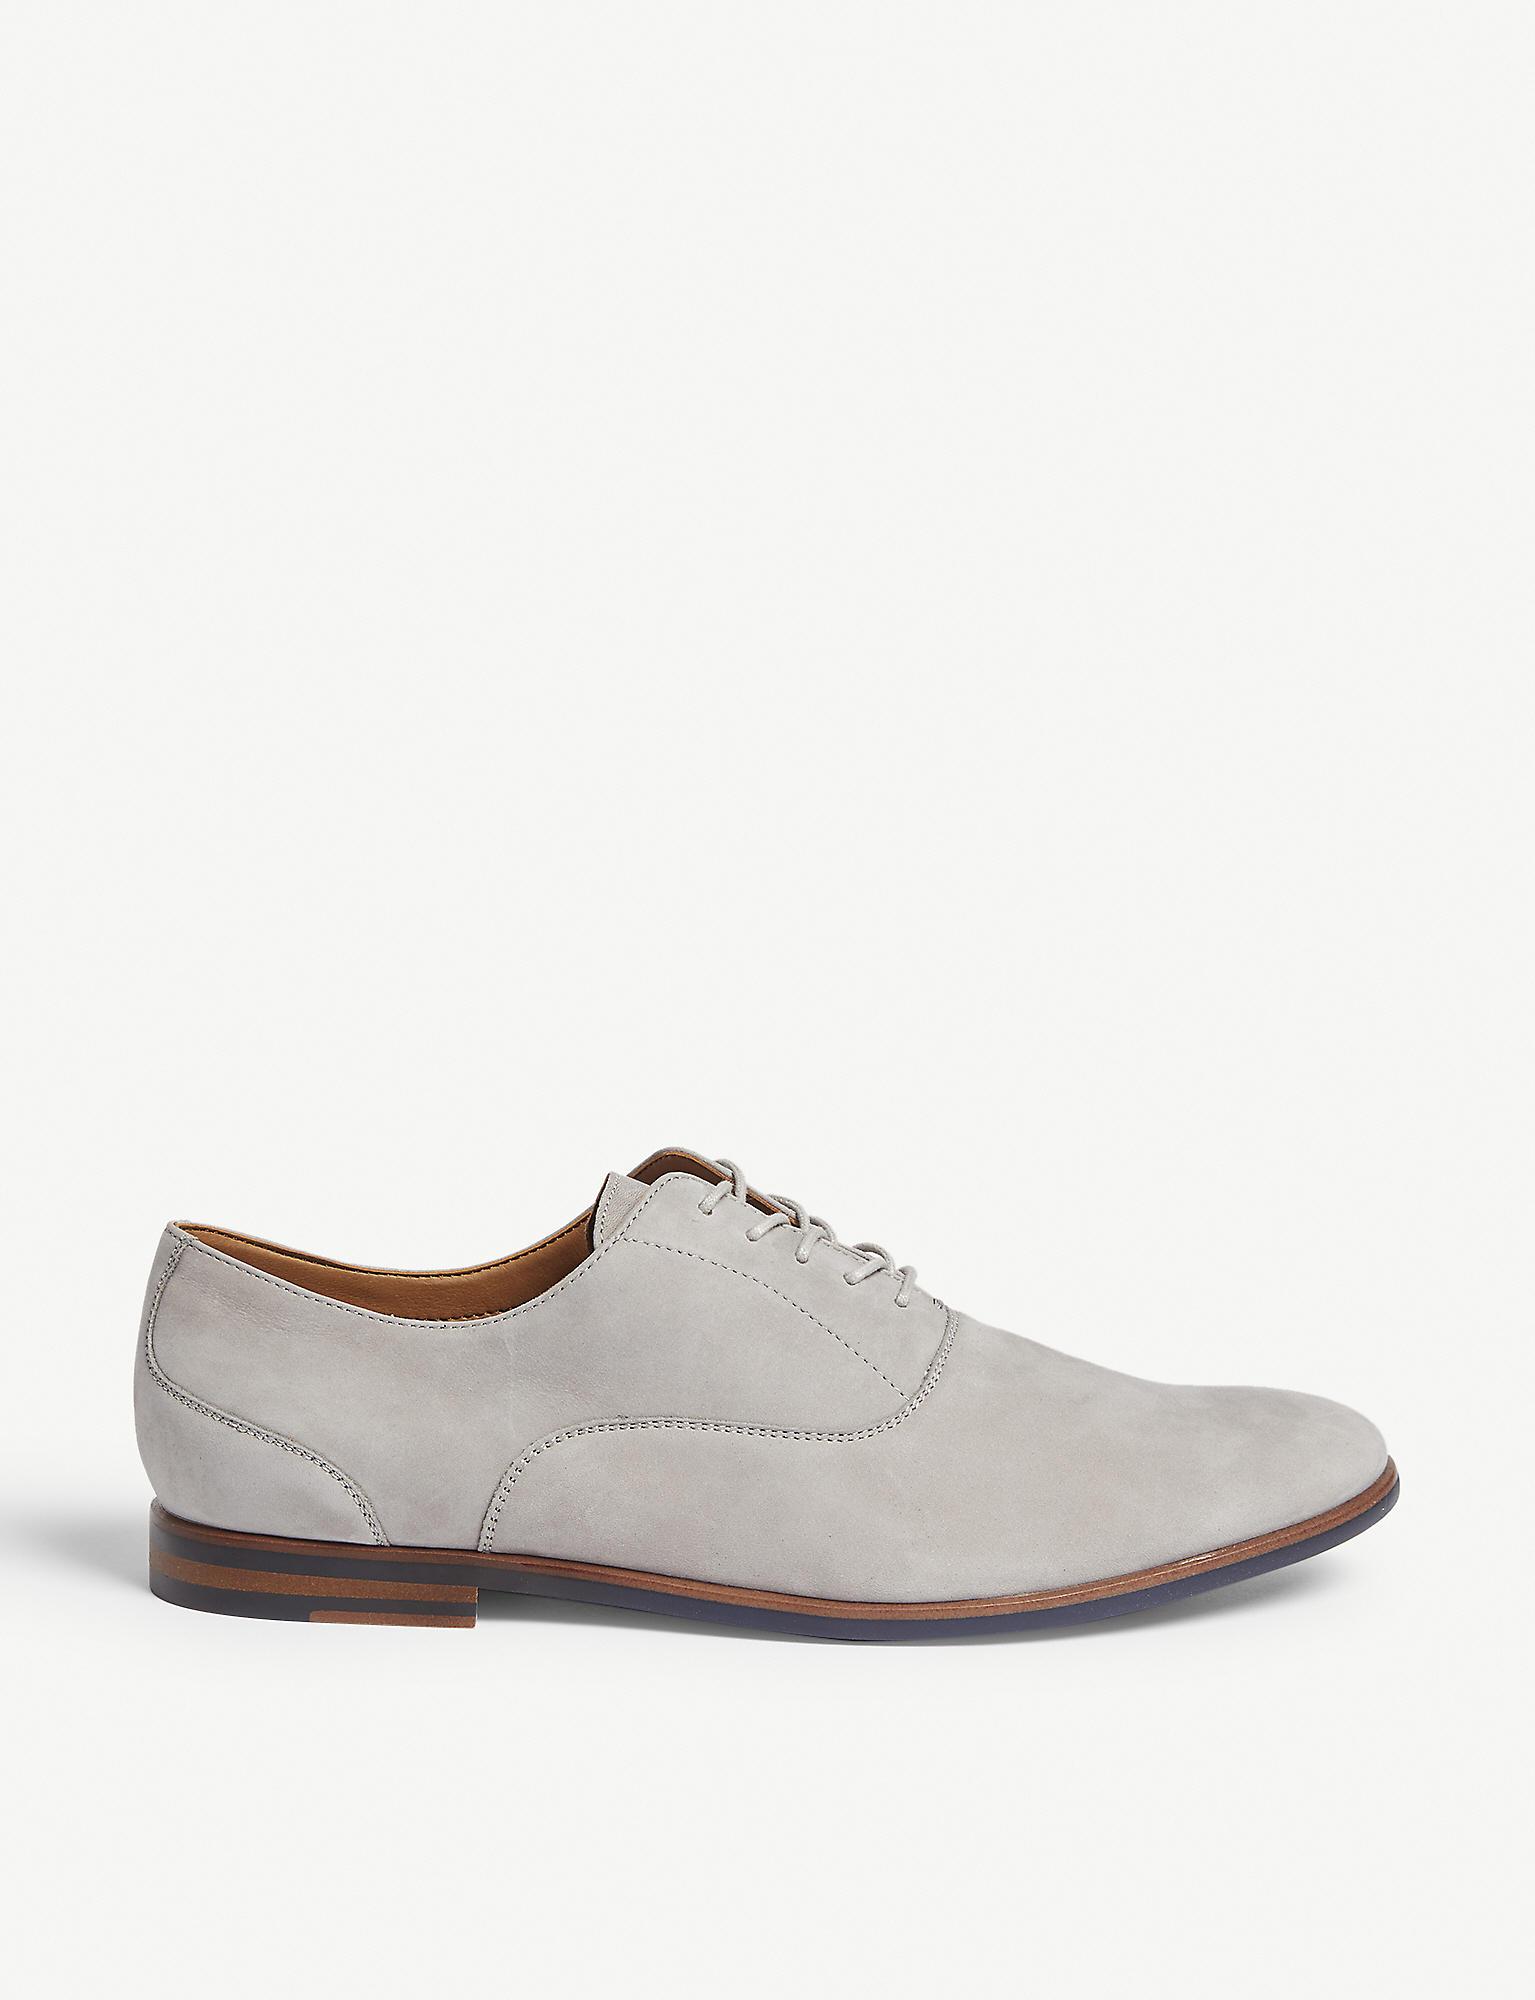 ALDO Wen-r Suede Oxford Shoes in Grey (Gray) for Men - Lyst